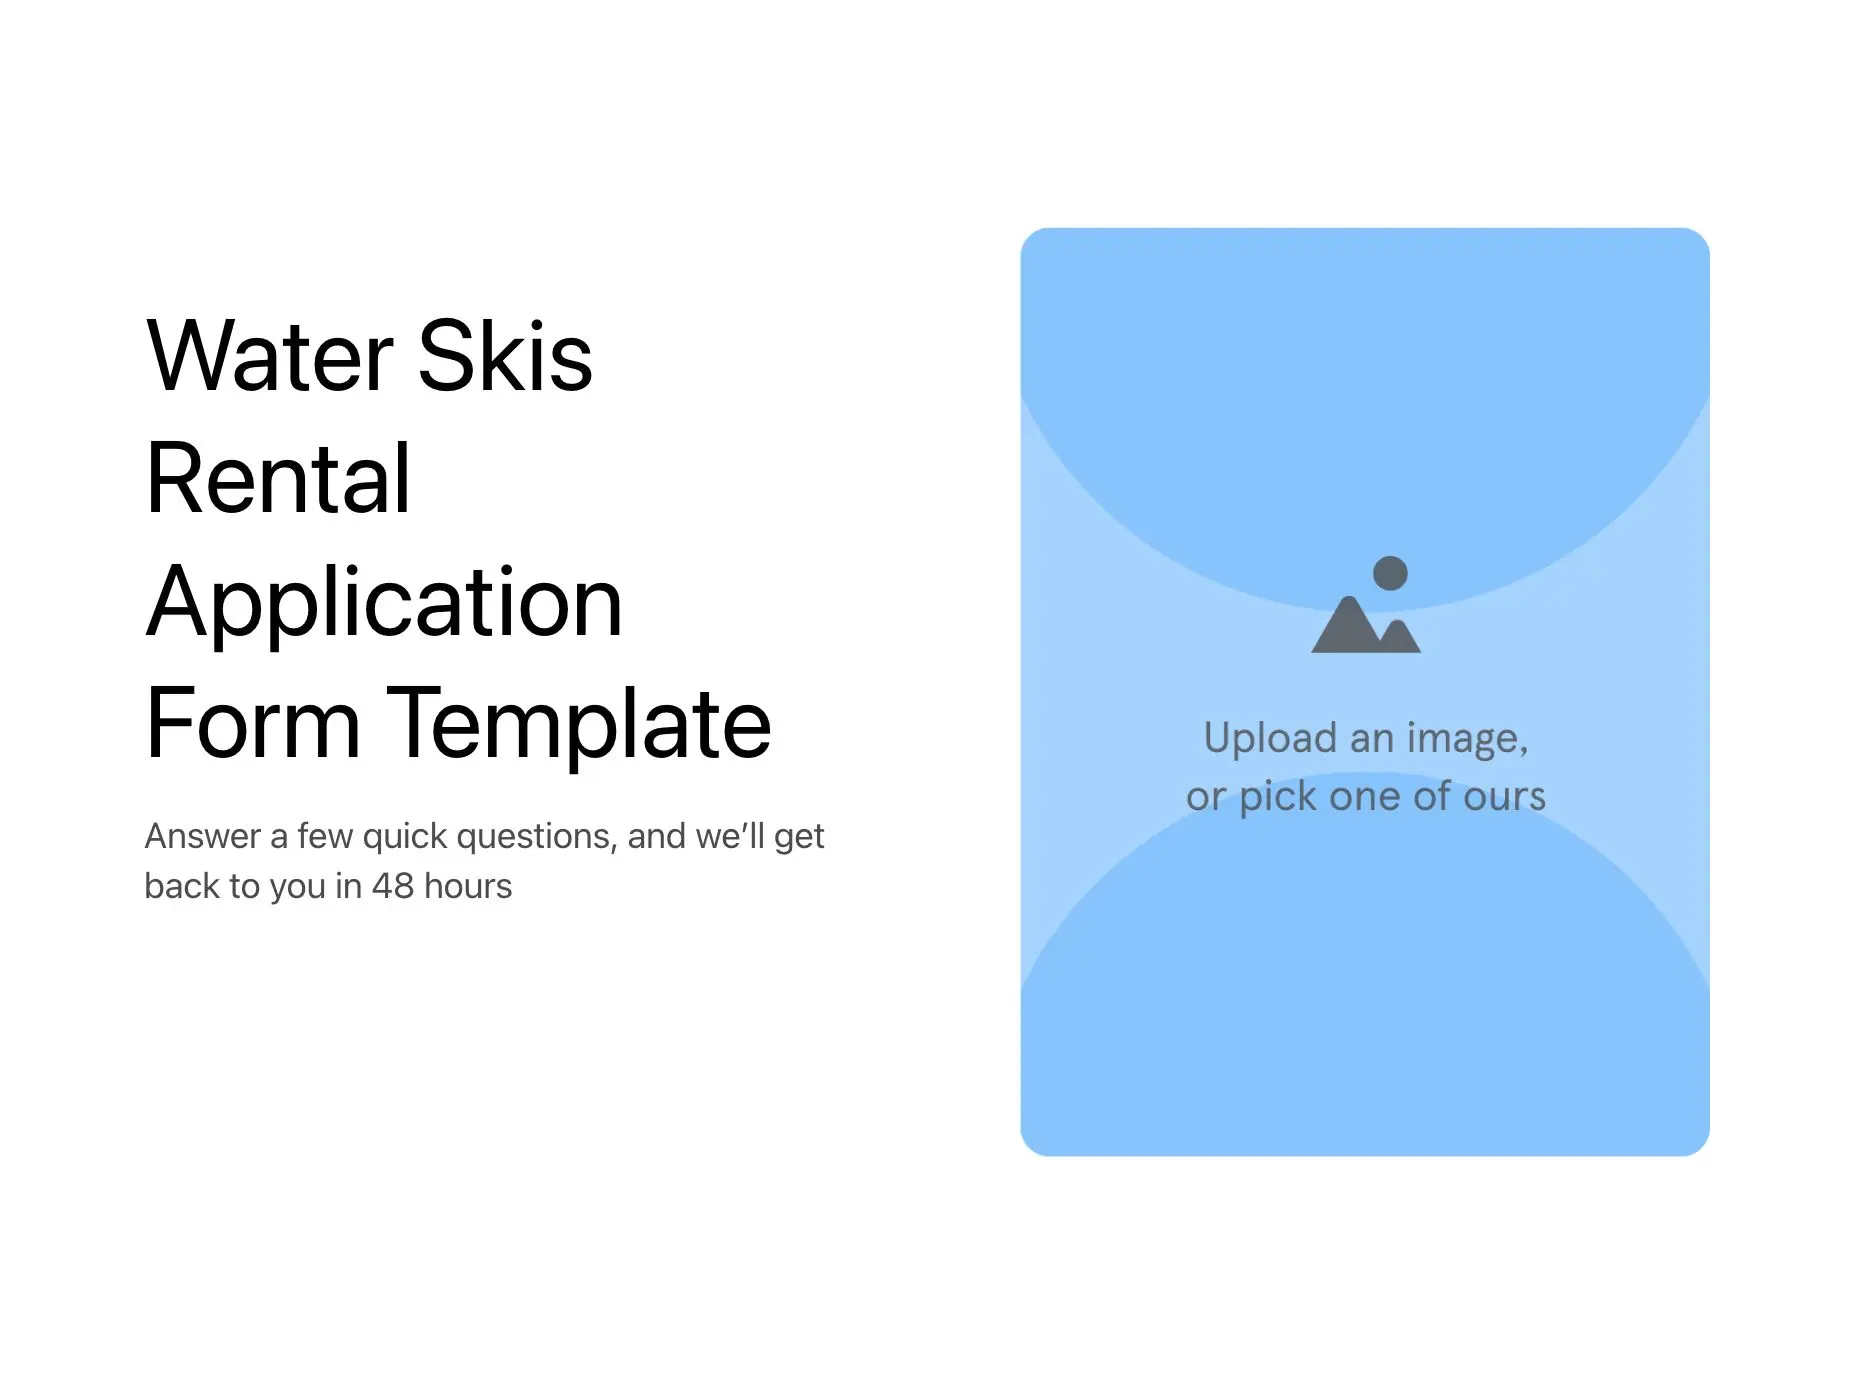 Water Skis Rental Application Form Template Hero